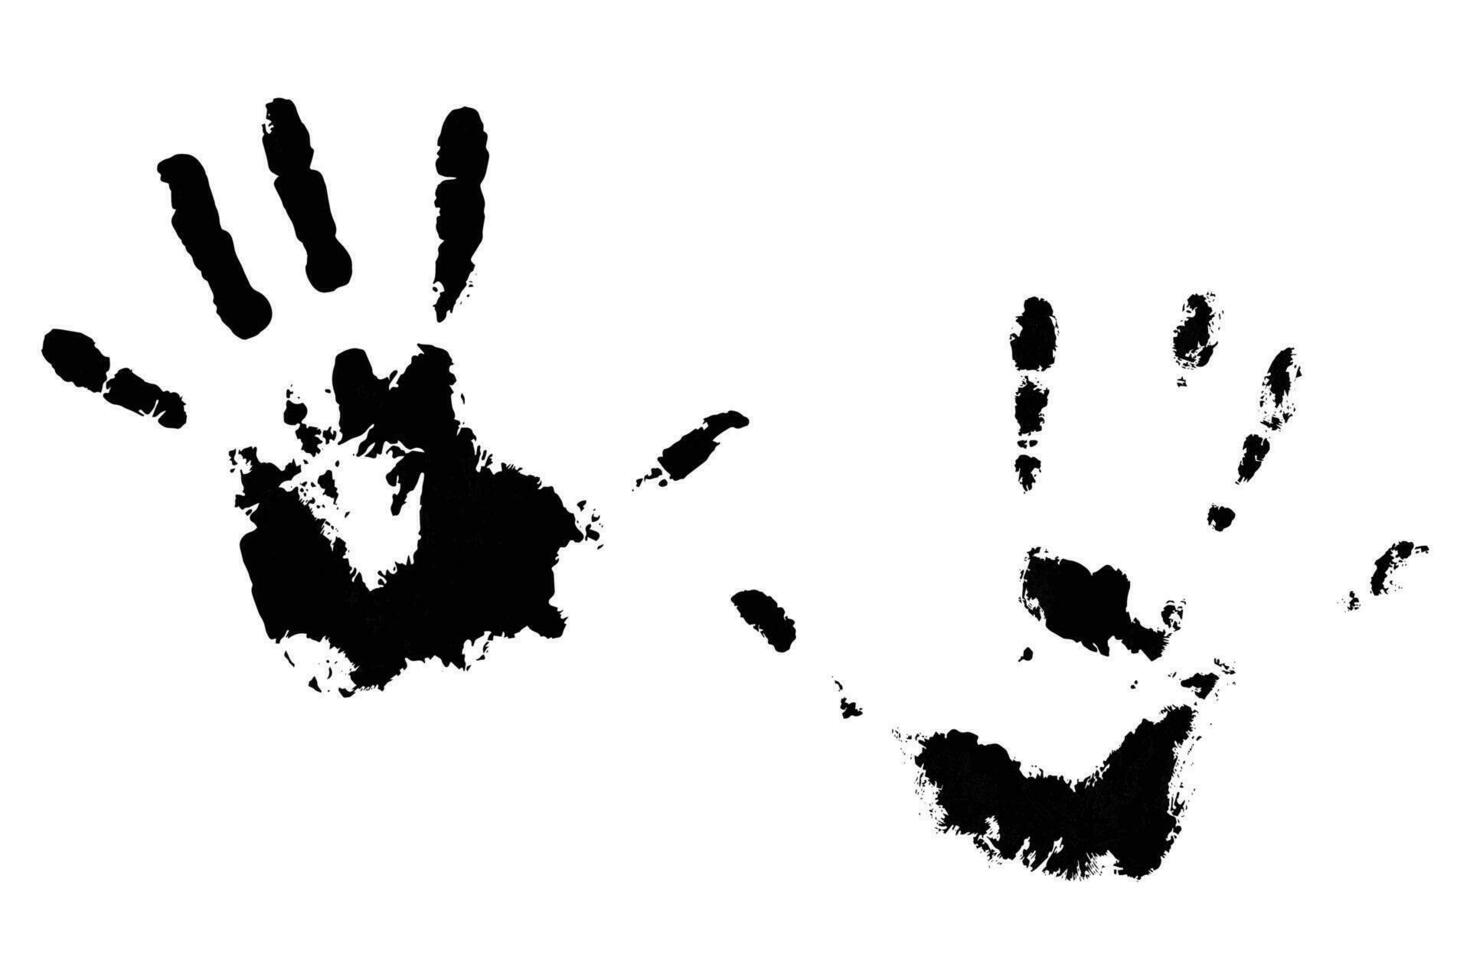 Handprint hands black. Hand print and child handprint, vector illustration